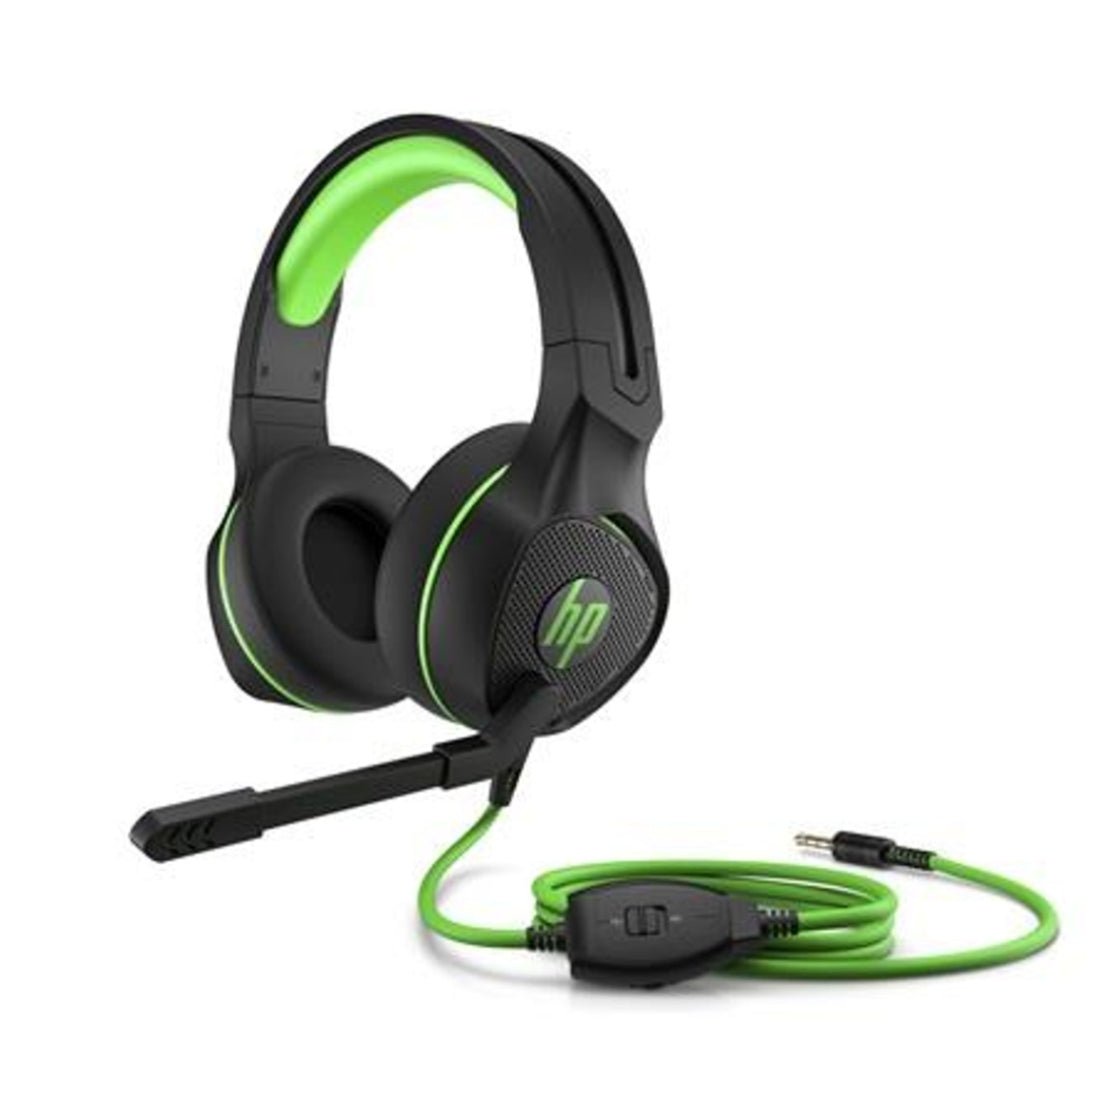 HP Pavilion 400 Wired Gaming Headphones - Black & Green - سماعة - Store 974 | ستور ٩٧٤